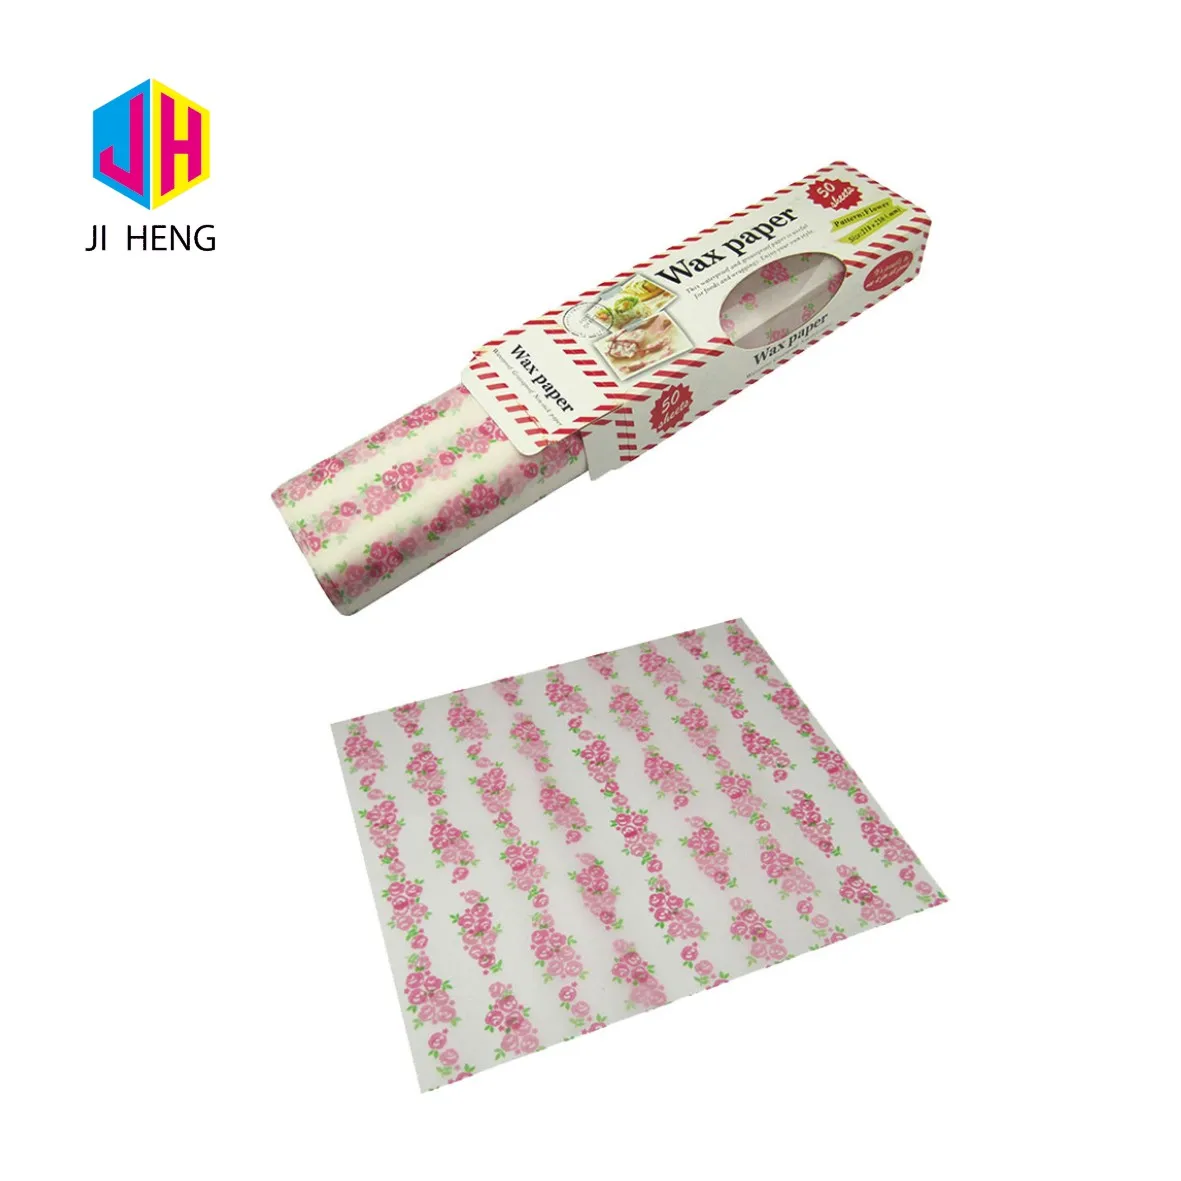 Download Sandwich Wrap Paper - Buy Sandwich Wrap Paper Product on Alibaba.com